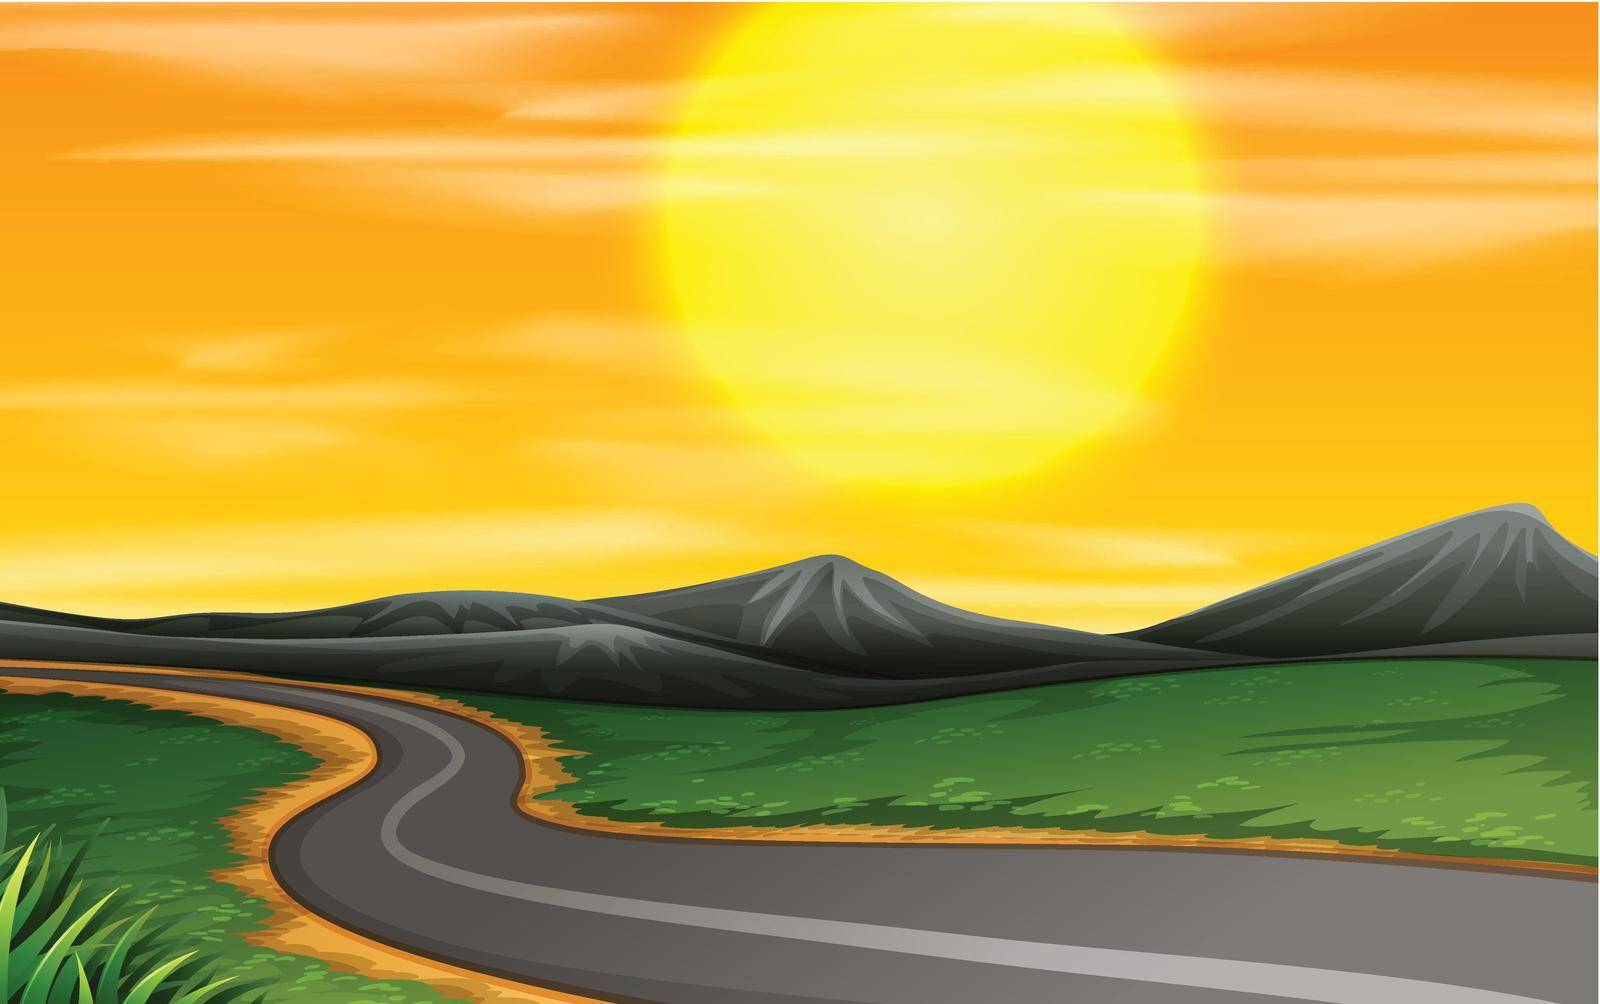 Road through a field illustration